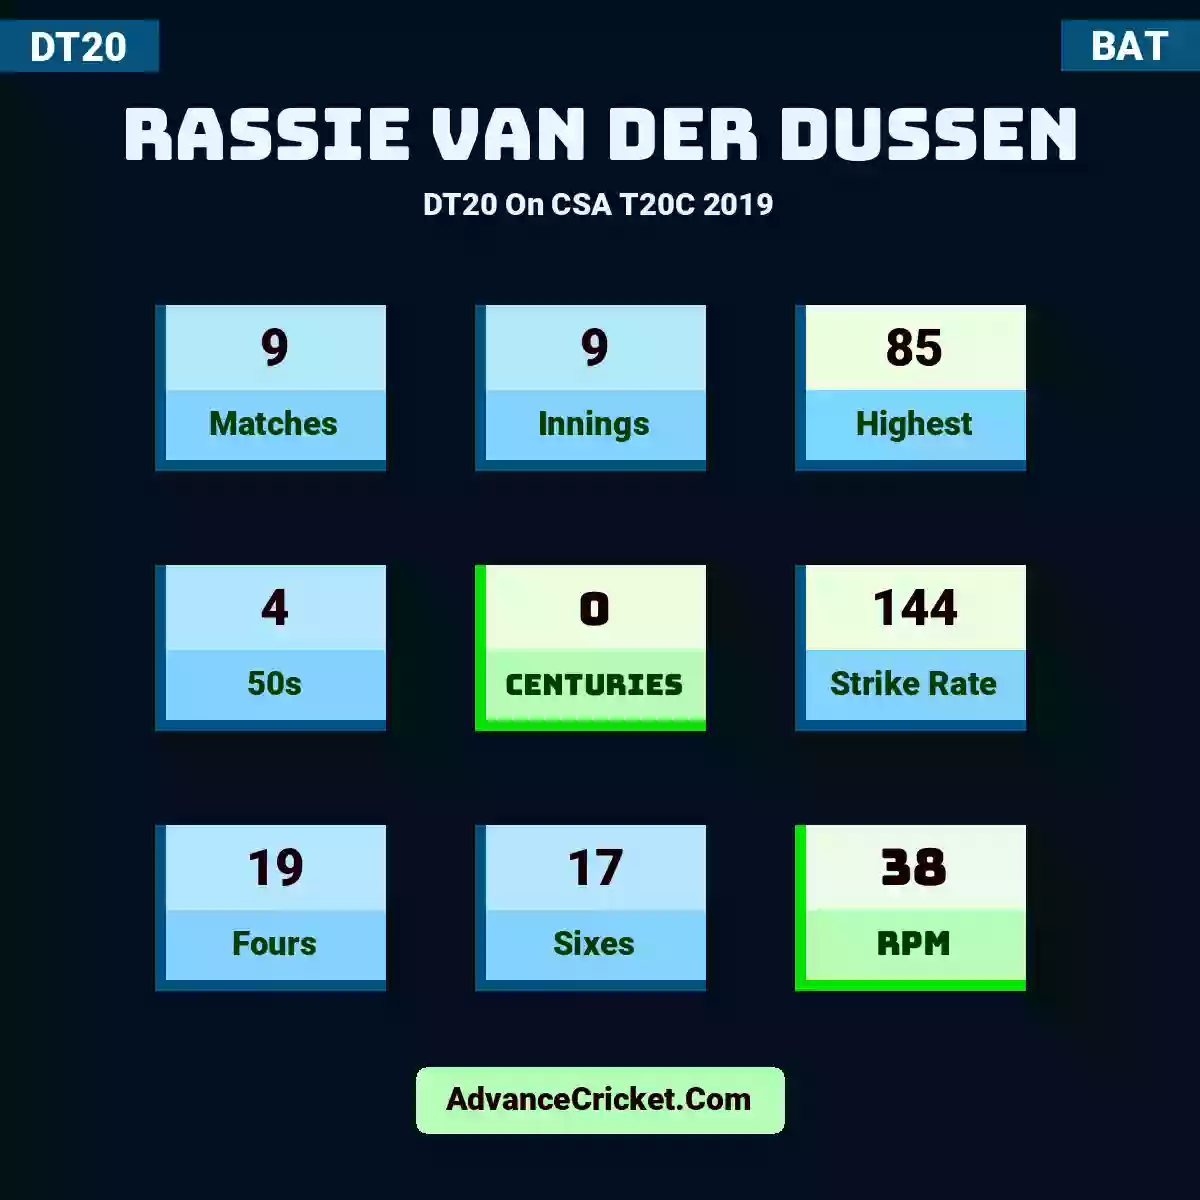 Rassie van der Dussen DT20  On CSA T20C 2019, Rassie van der Dussen played 9 matches, scored 85 runs as highest, 4 half-centuries, and 0 centuries, with a strike rate of 144. R.Dussen hit 19 fours and 17 sixes, with an RPM of 38.